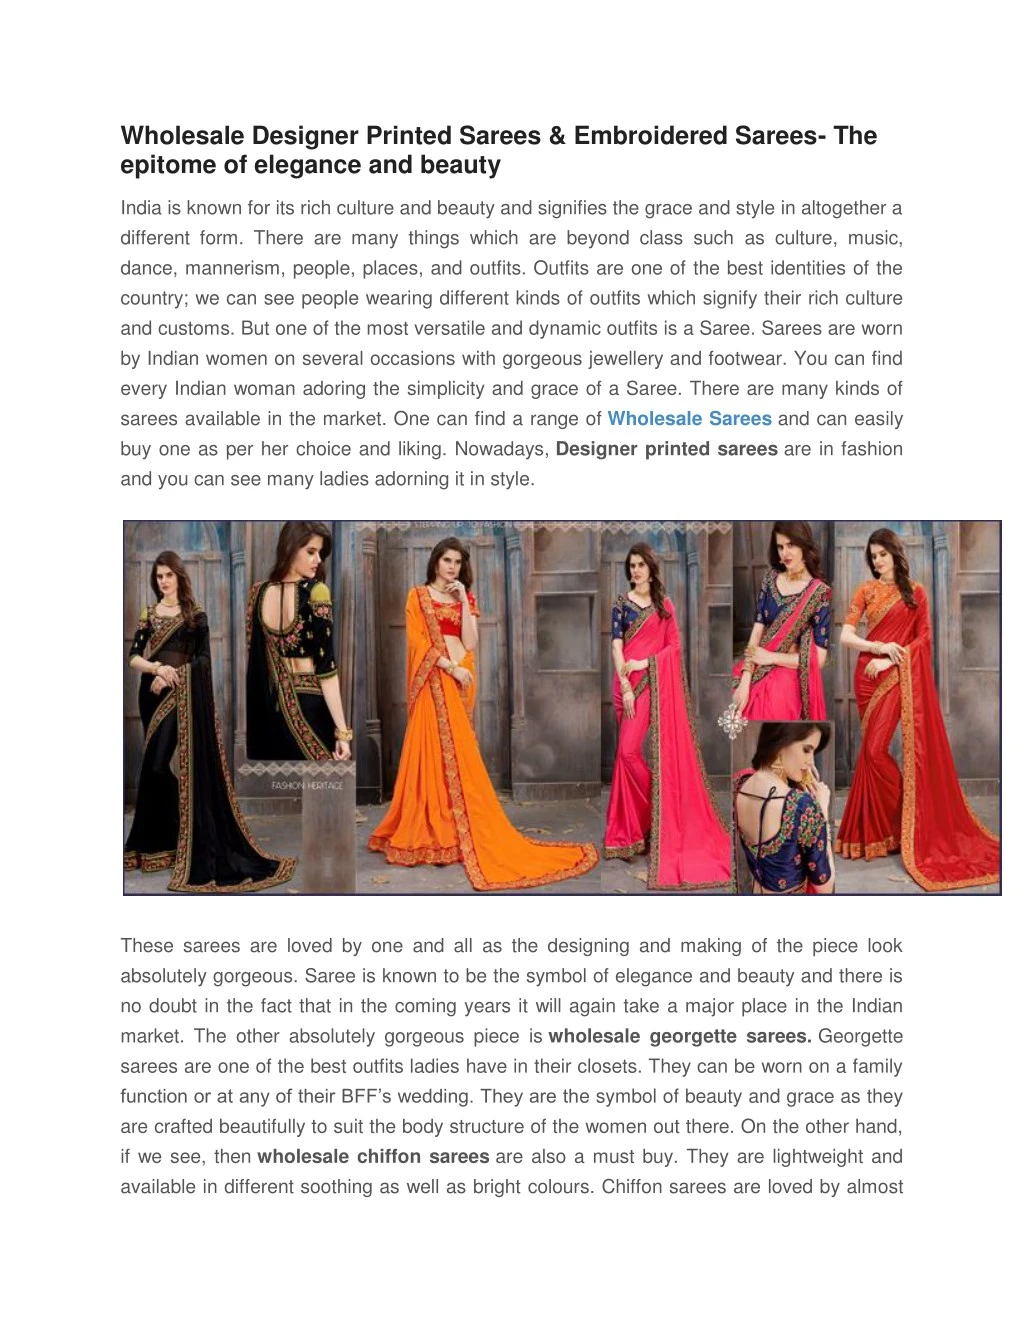 wholesale designer printed sarees embroidered n.